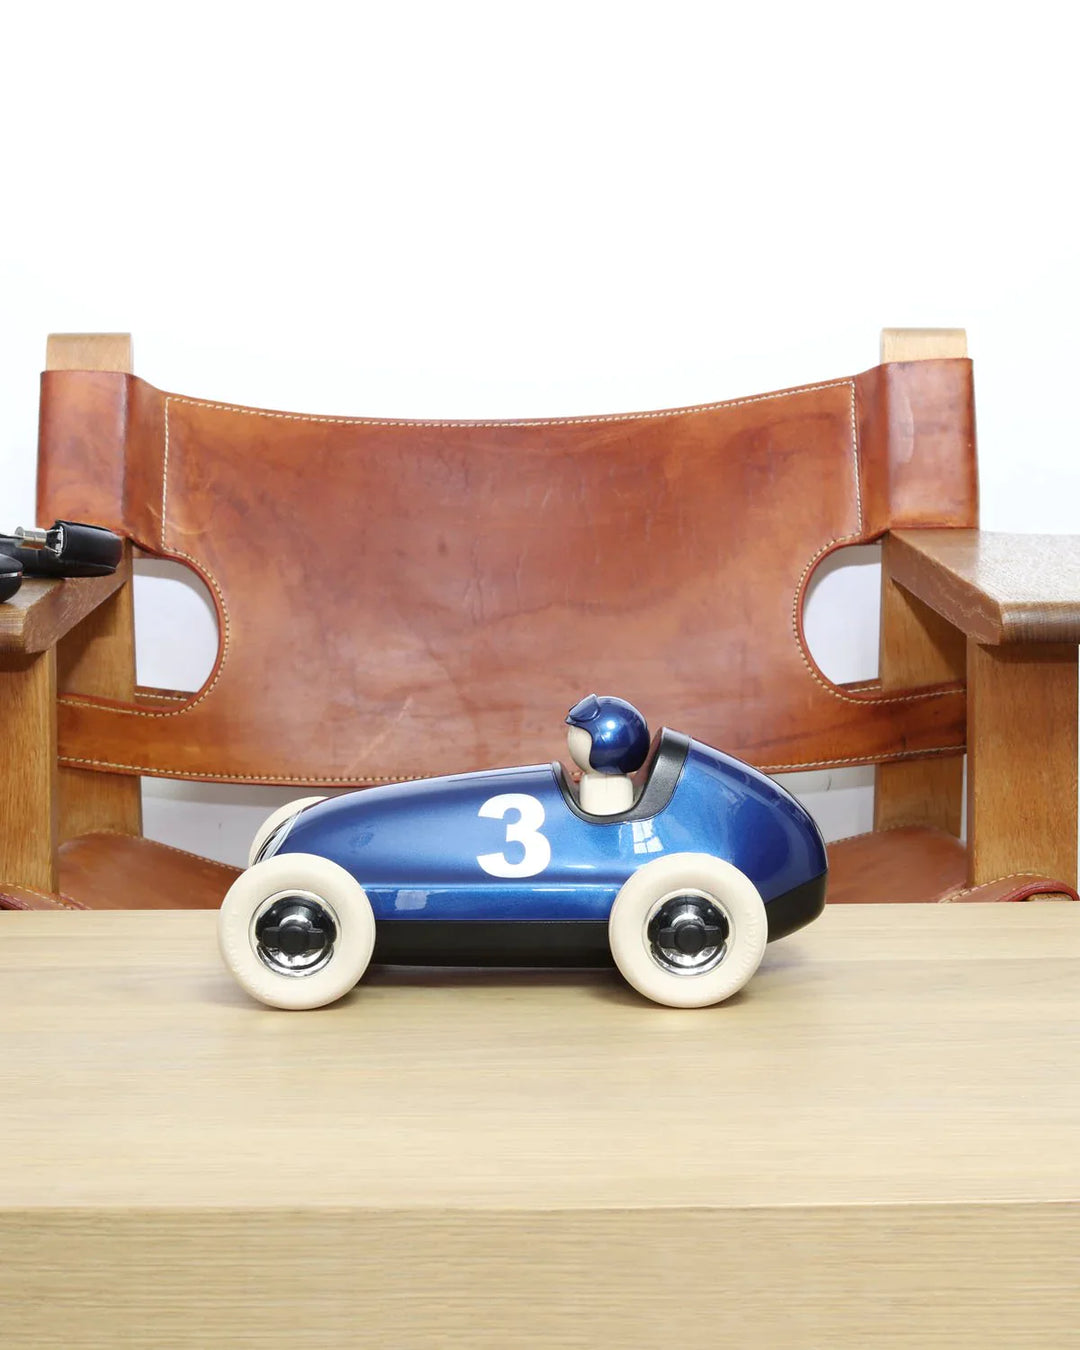 Playforever BRUNO ROADSTER Racing Car - Metallic Blue